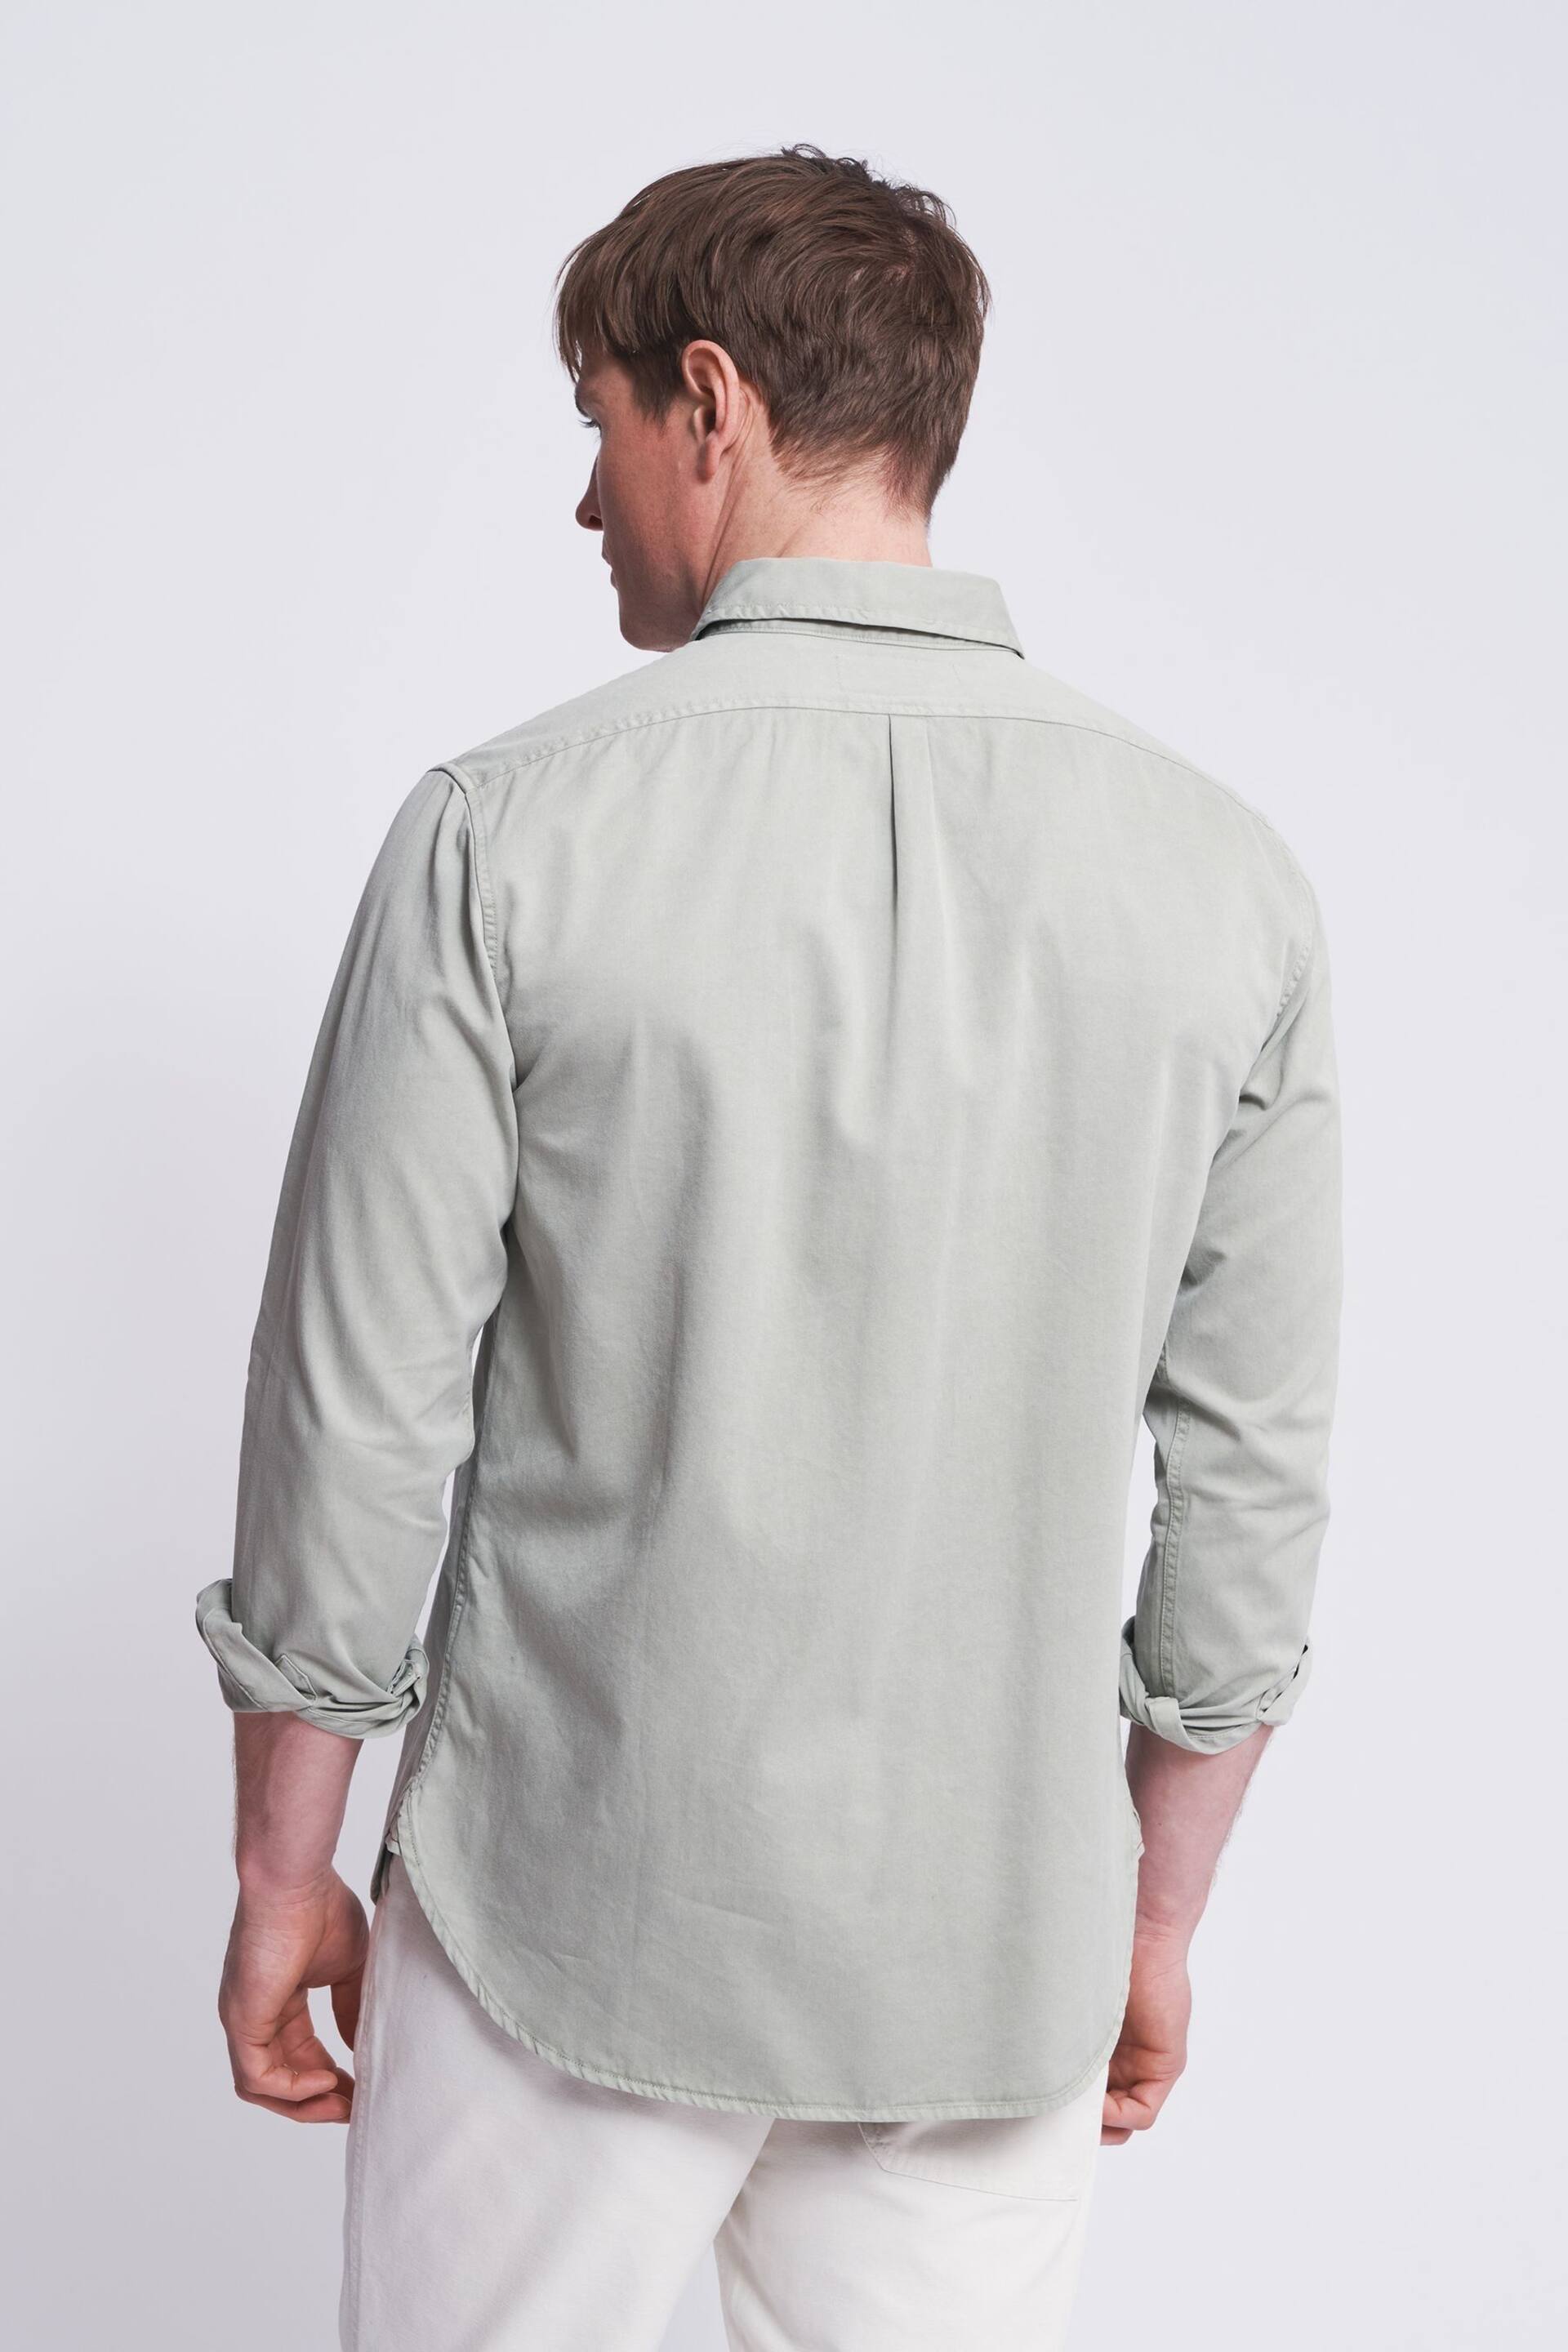 Aubin Hessle Garment Dyed Shirt - Image 2 of 7